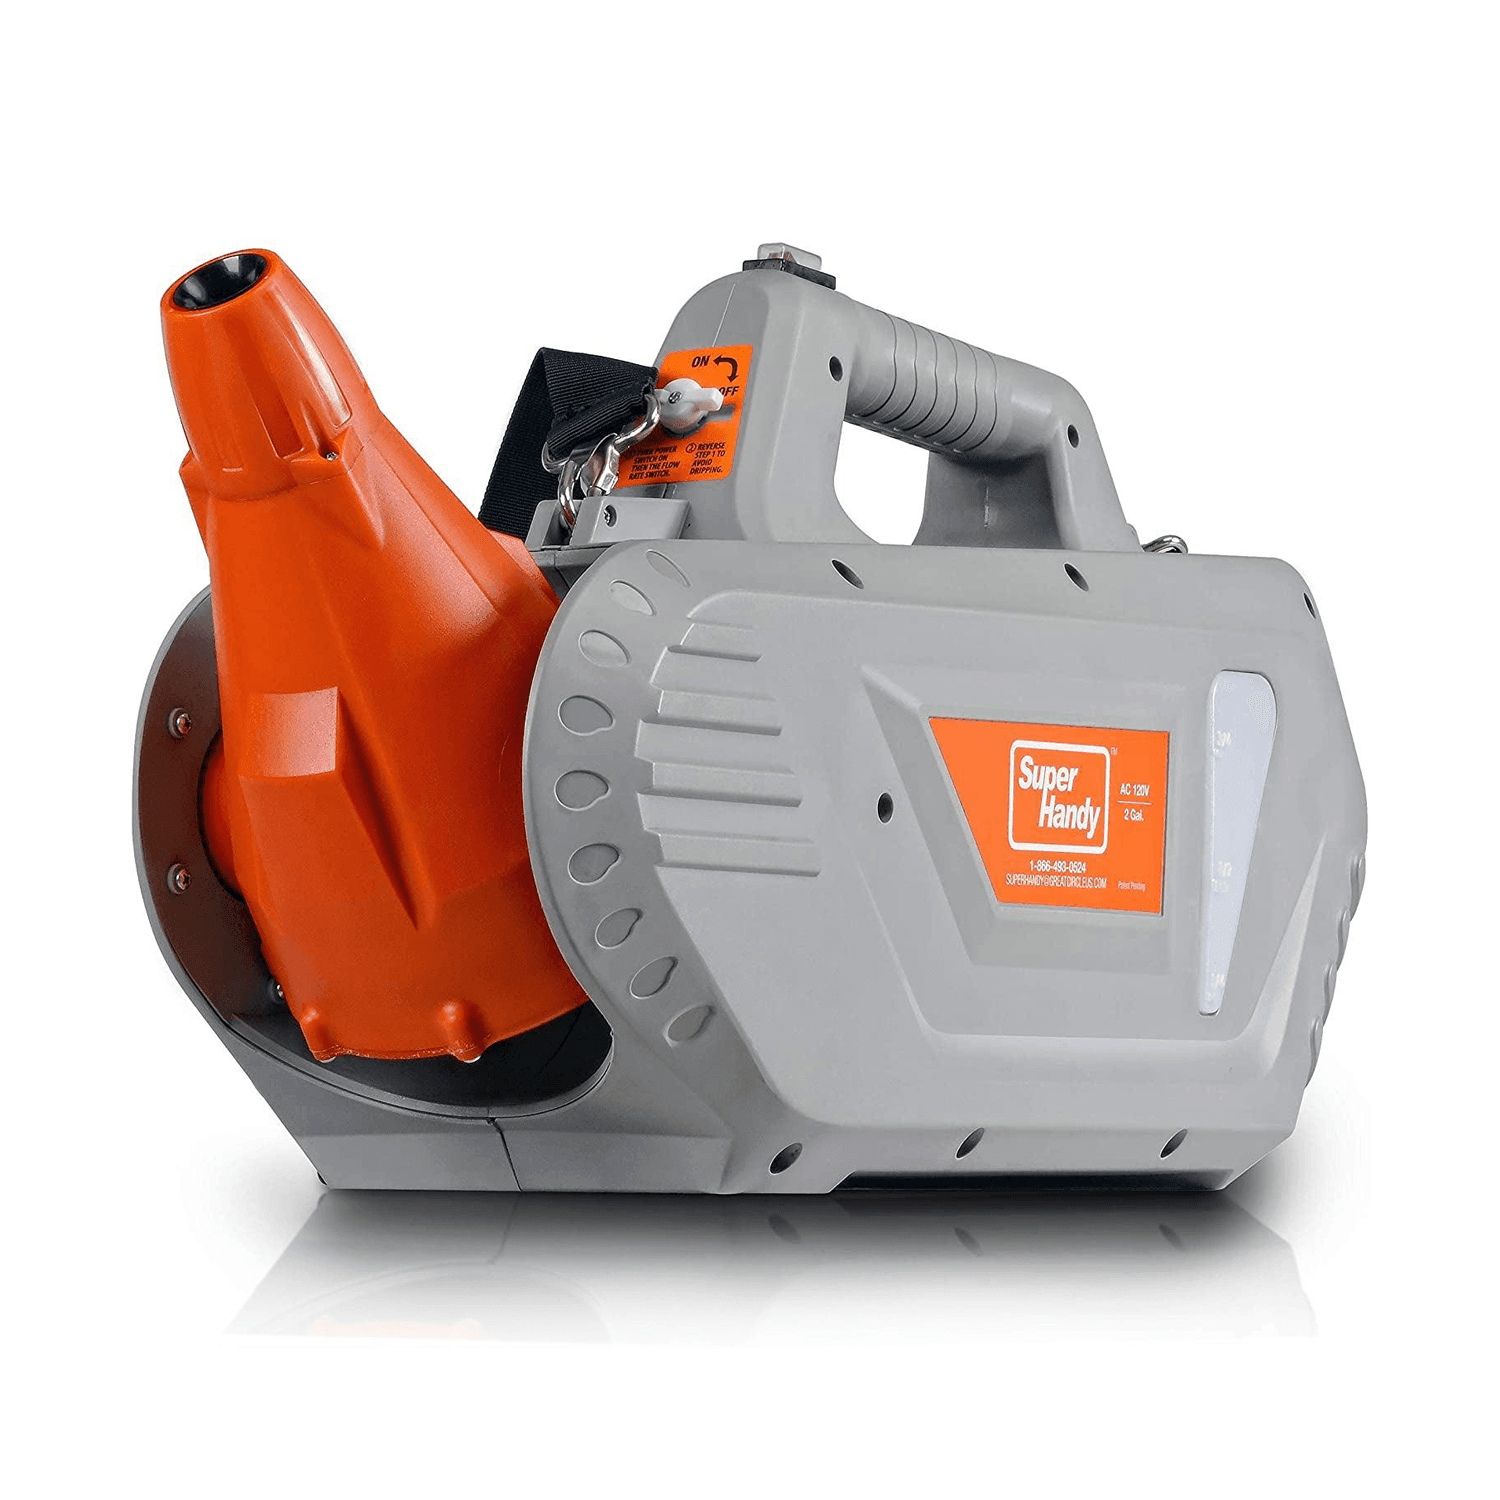 SuperHandy Electric Handheld Bug Sprayer & Disinfectant Fogger 120V Corded, 2Gal (Orange) - DIY Tools by GreatCircleUS